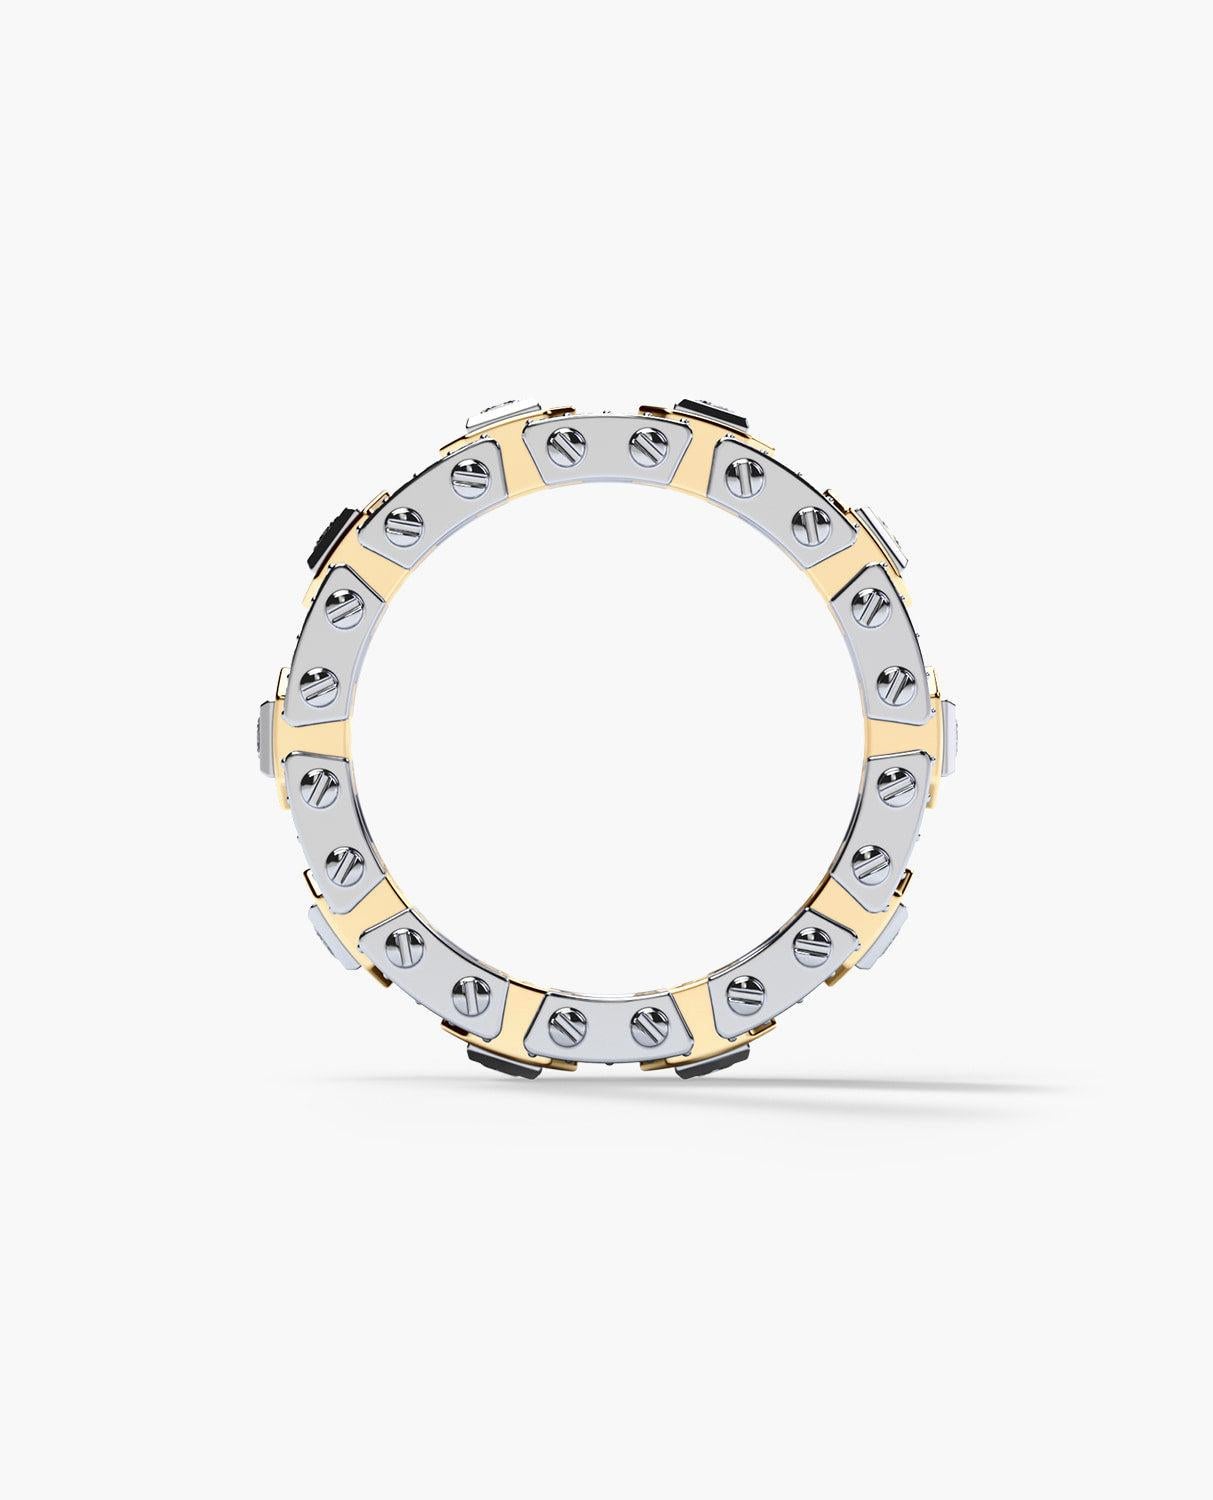 Princess Cut 14k White & Yellow Gold 1.20ct Diamond Ring or Wedding Band